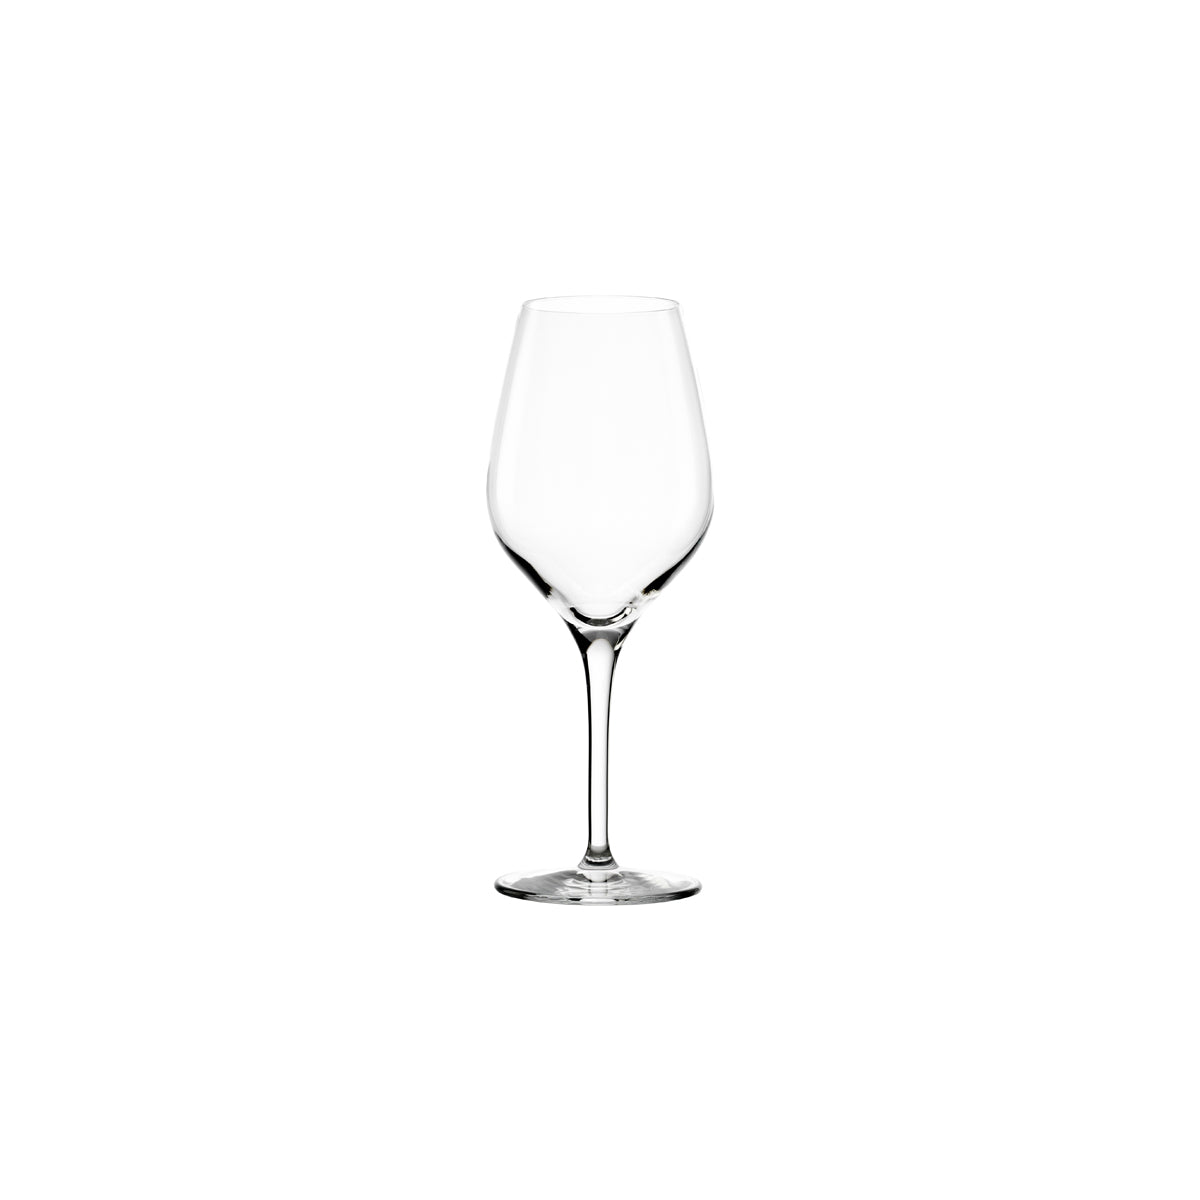 360-775 Stolzle Exquisit Royal White Wine 350ml Tomkin Australia Hospitality Supplies